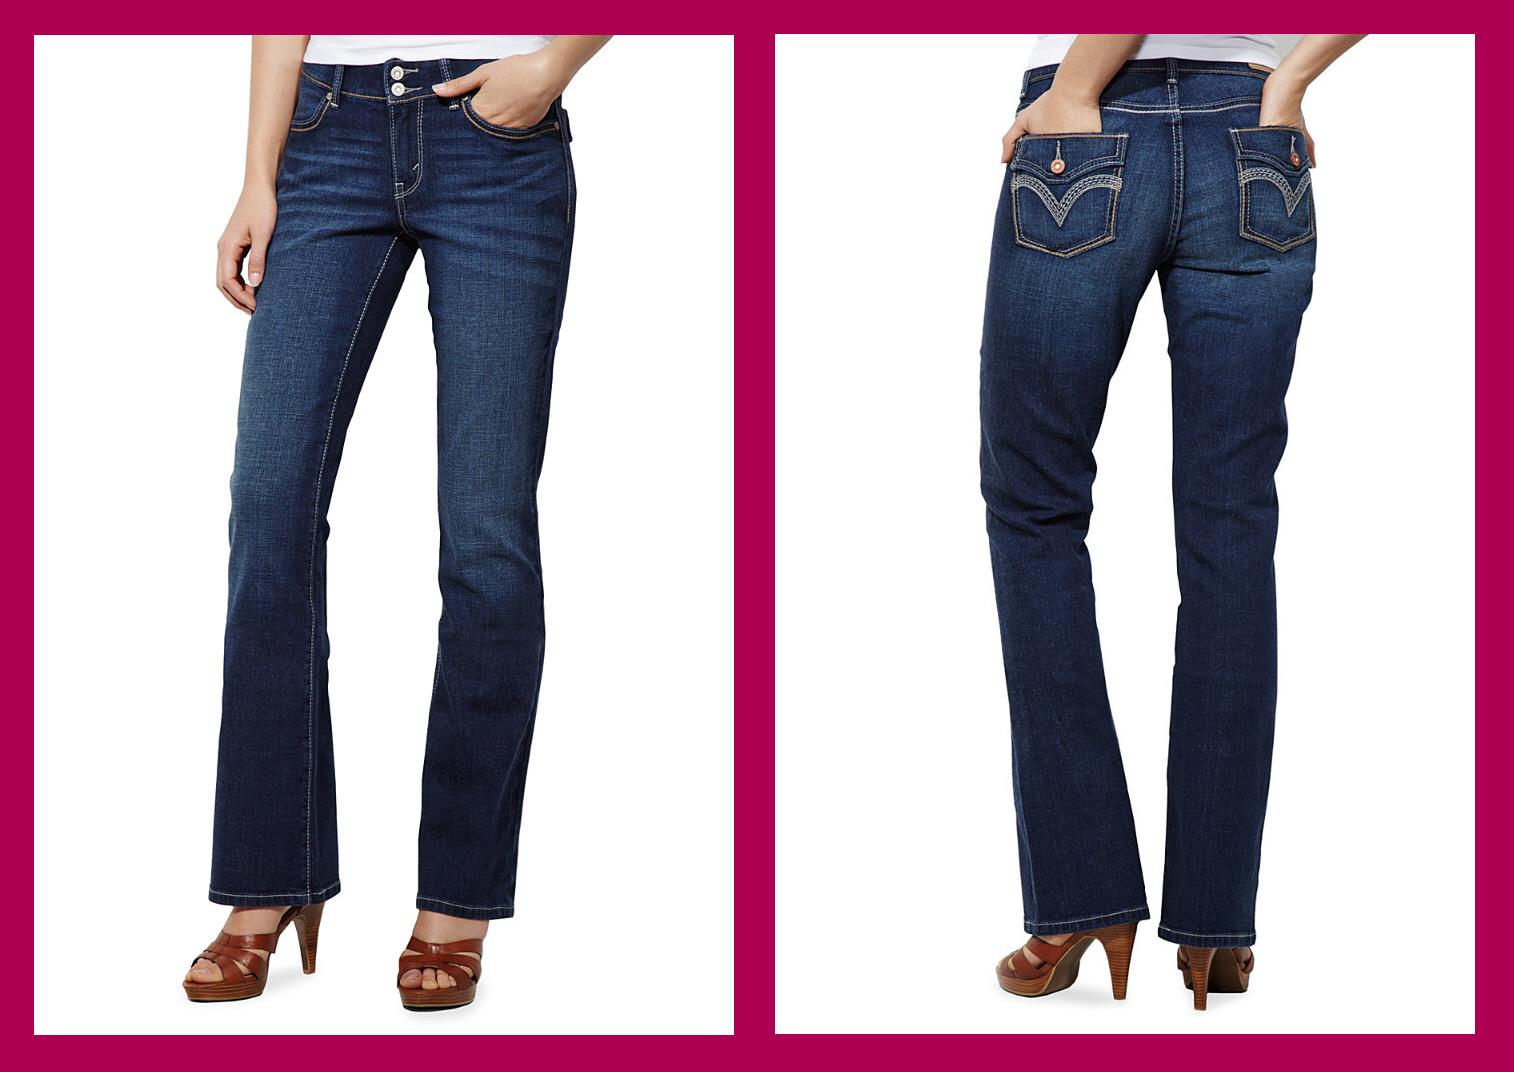 Levi's 529 Curvy Bootcut Women's Jeans $54 | eBay